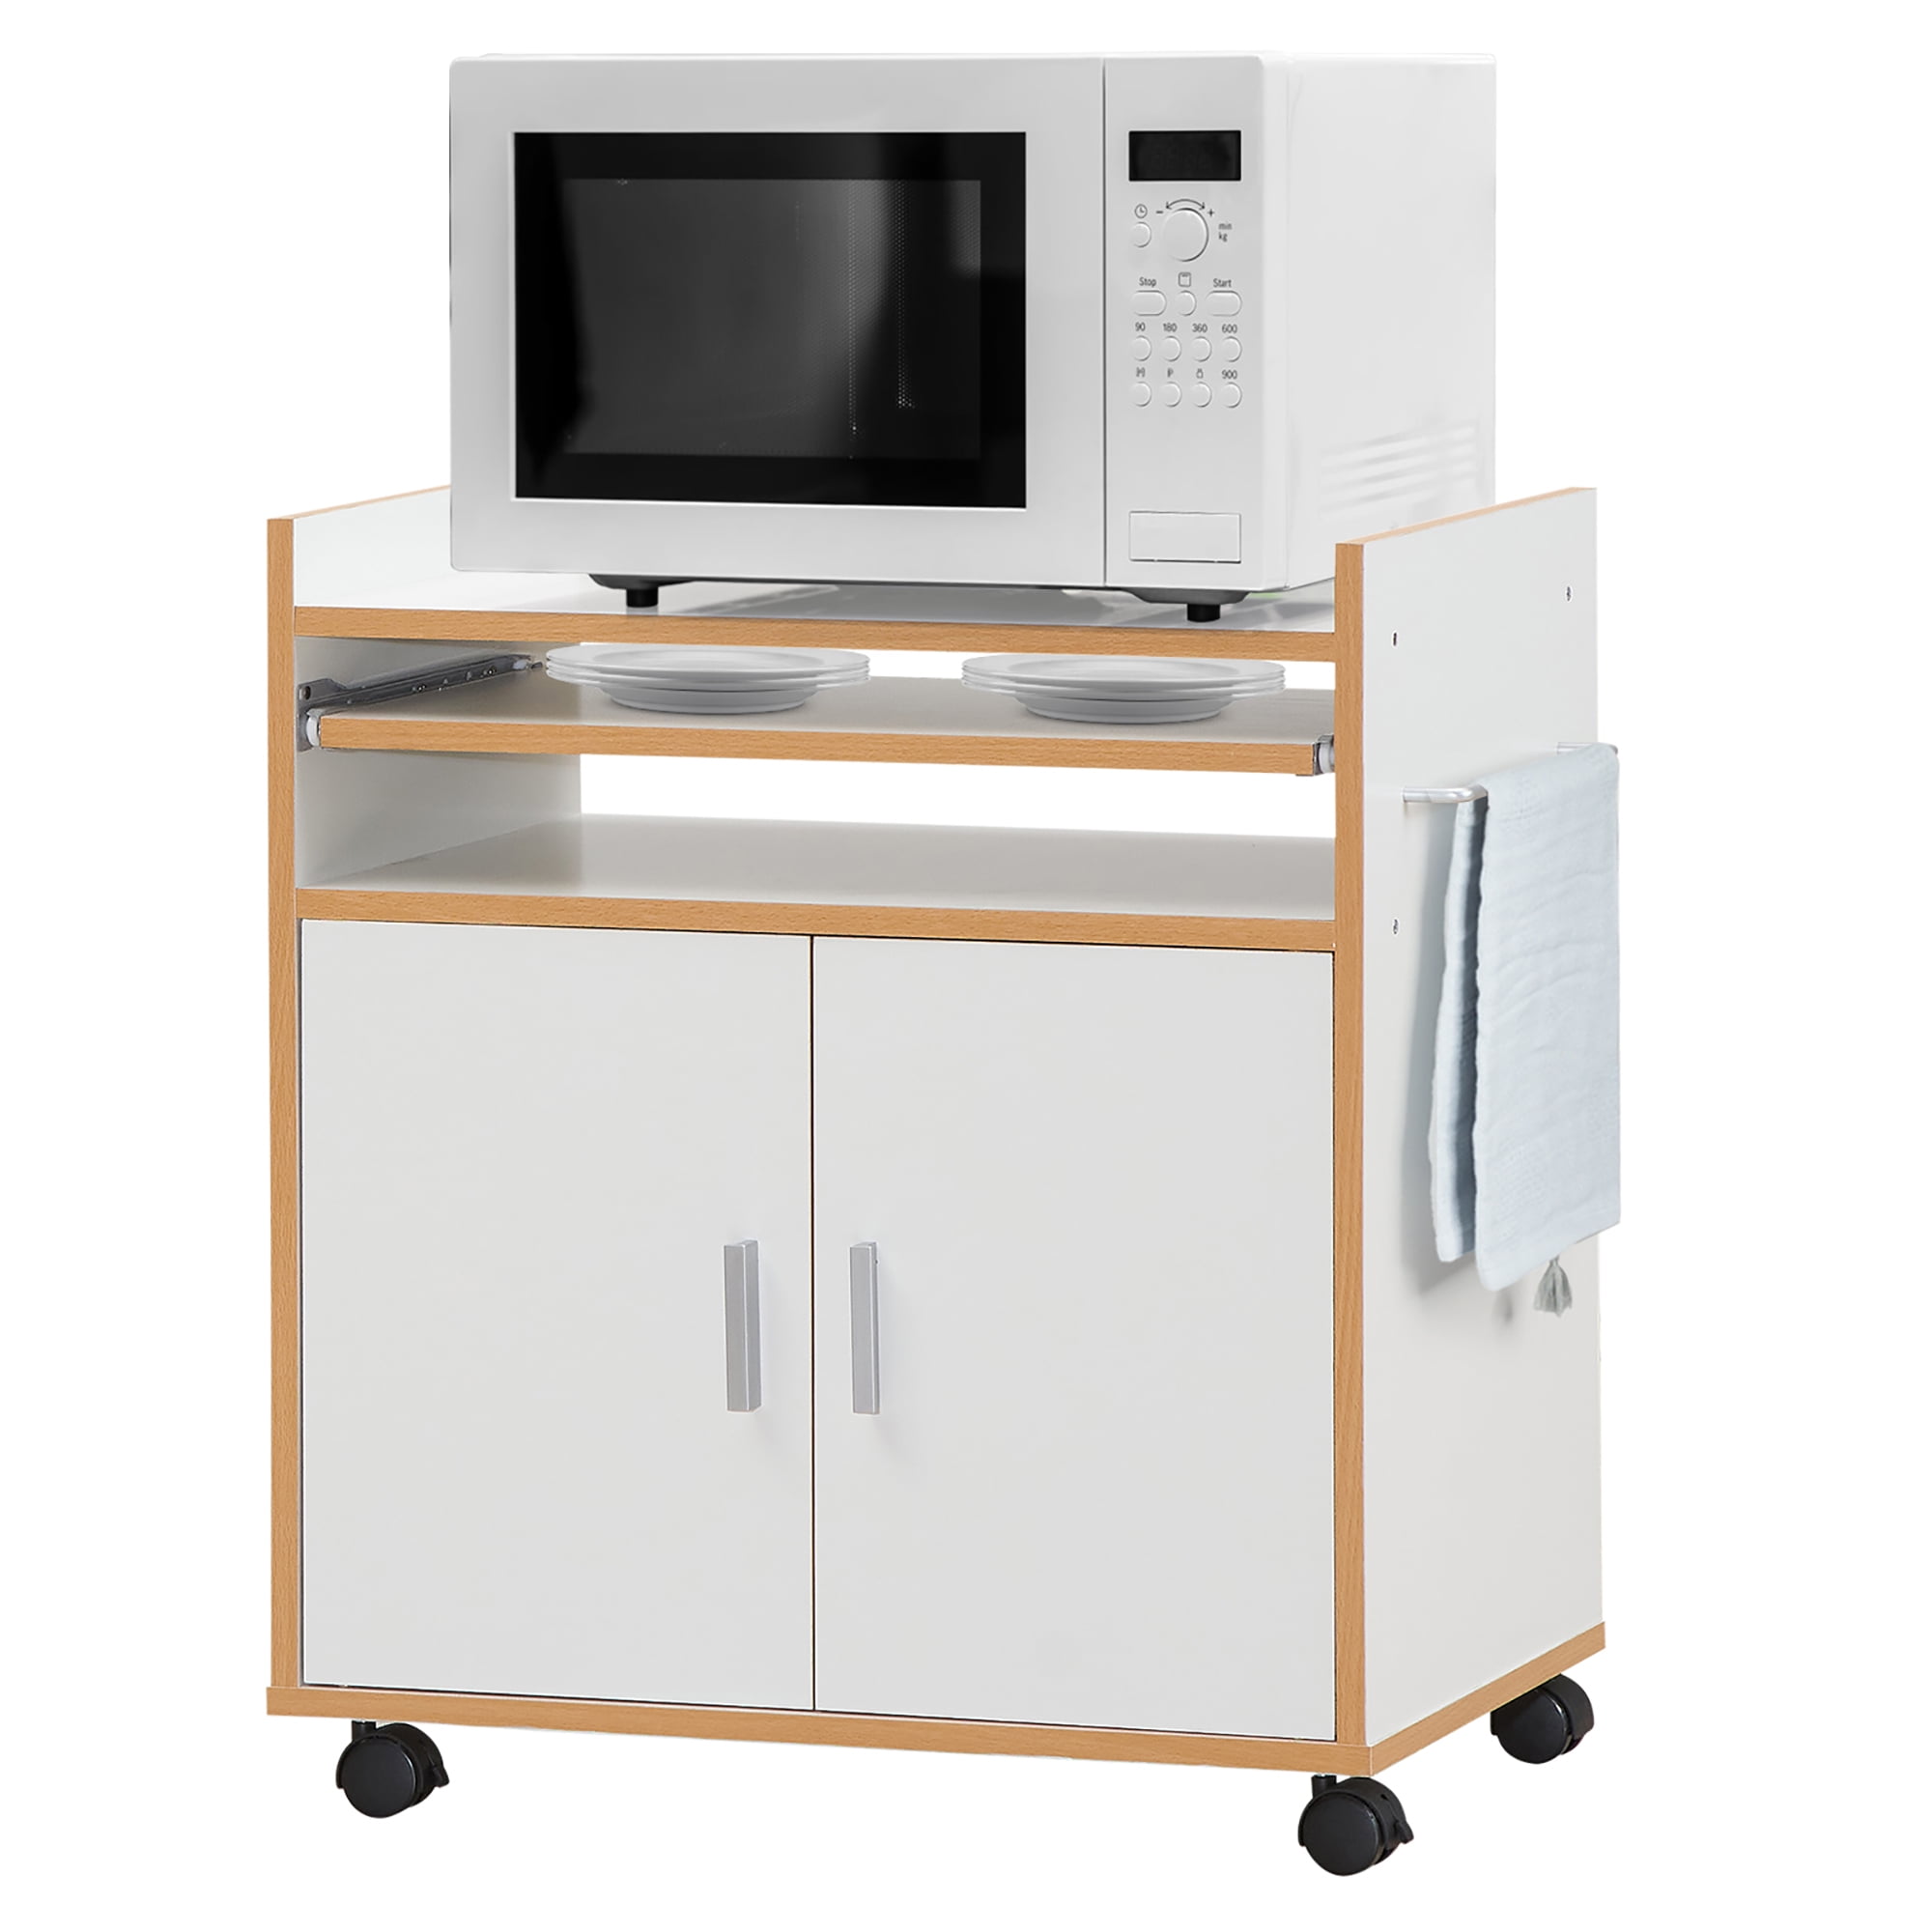 Mainstays 22 inchw Microwave Rolling Kitchen Storage Cart, White Finish